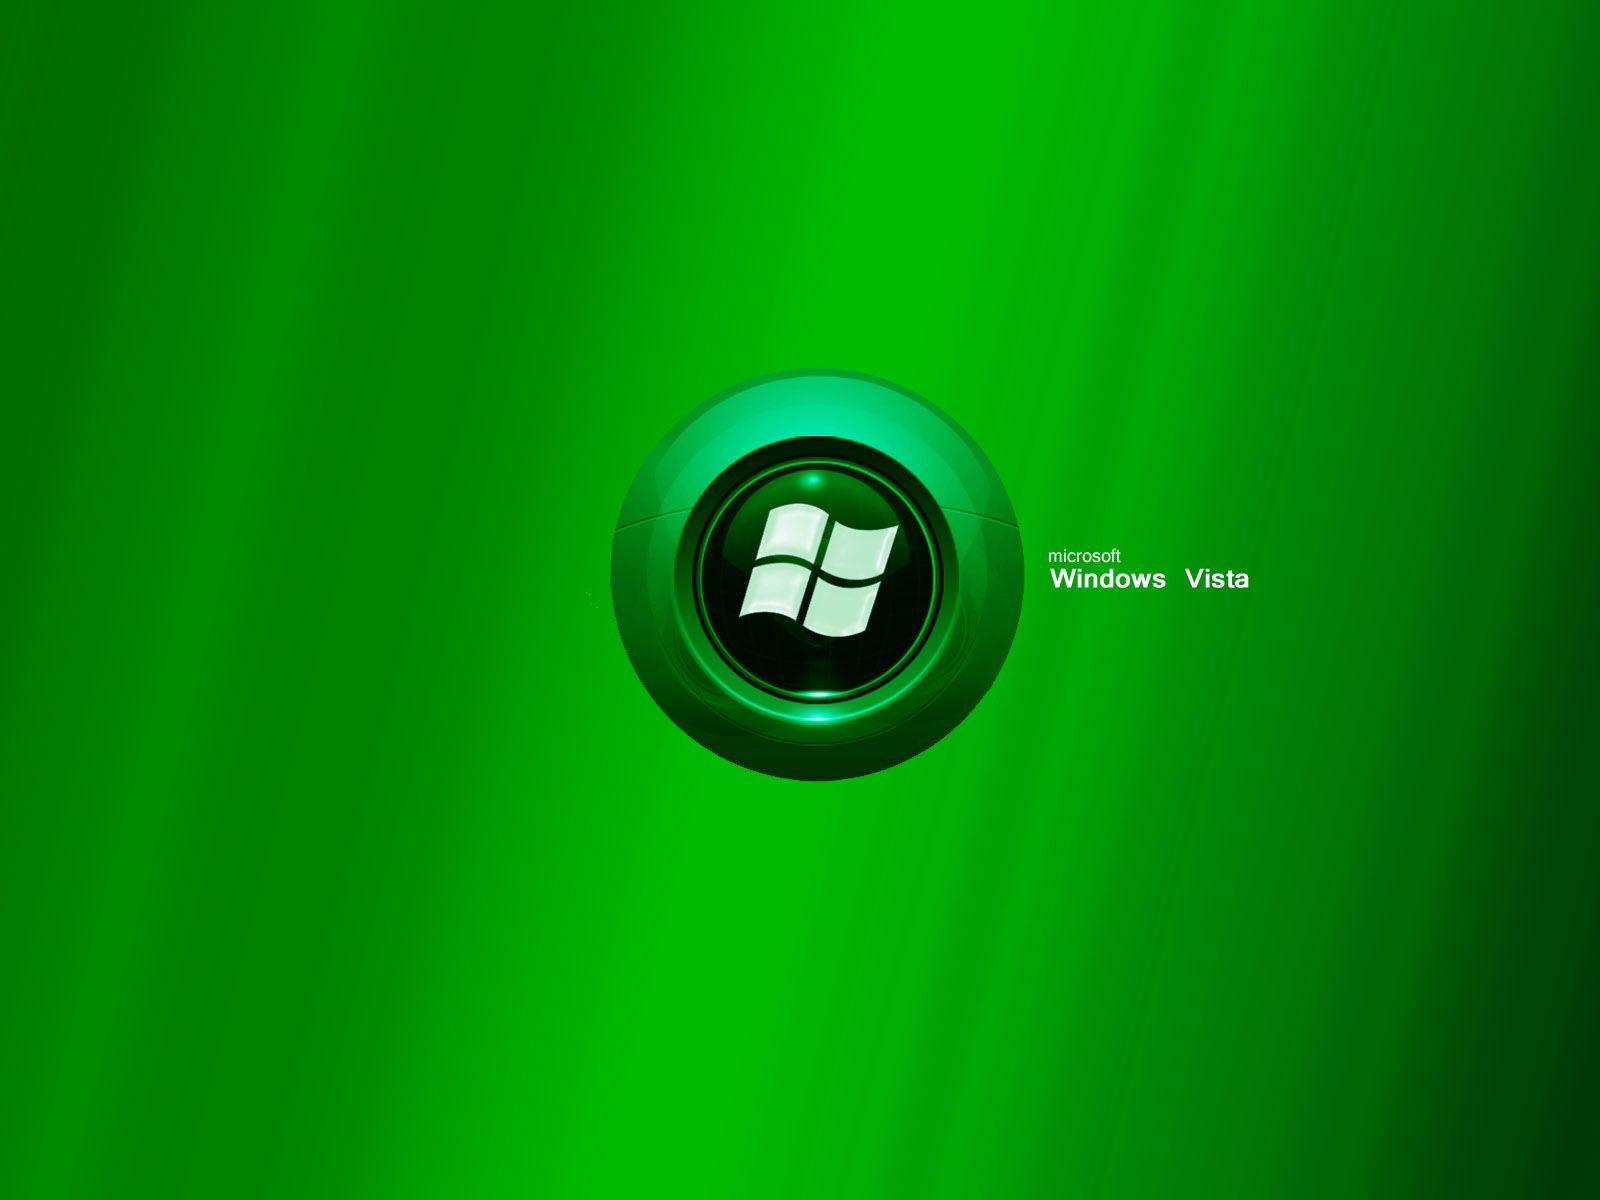 Green Leaf Vista010 - Windows 7 Wallpaper 26873334 - Fanpop